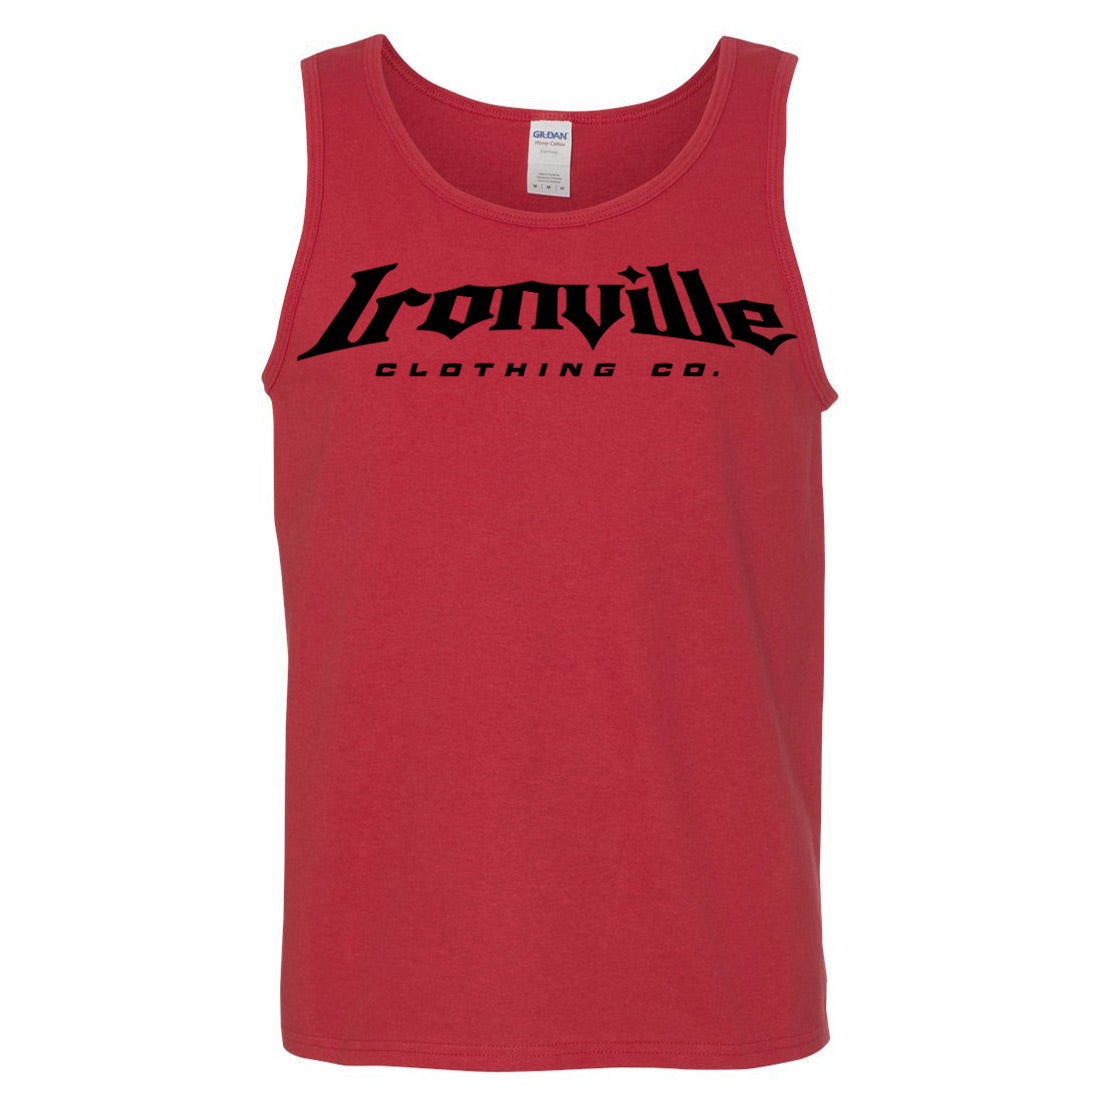 Ironville STATE PRISON Standard Cut Gym Tank Top